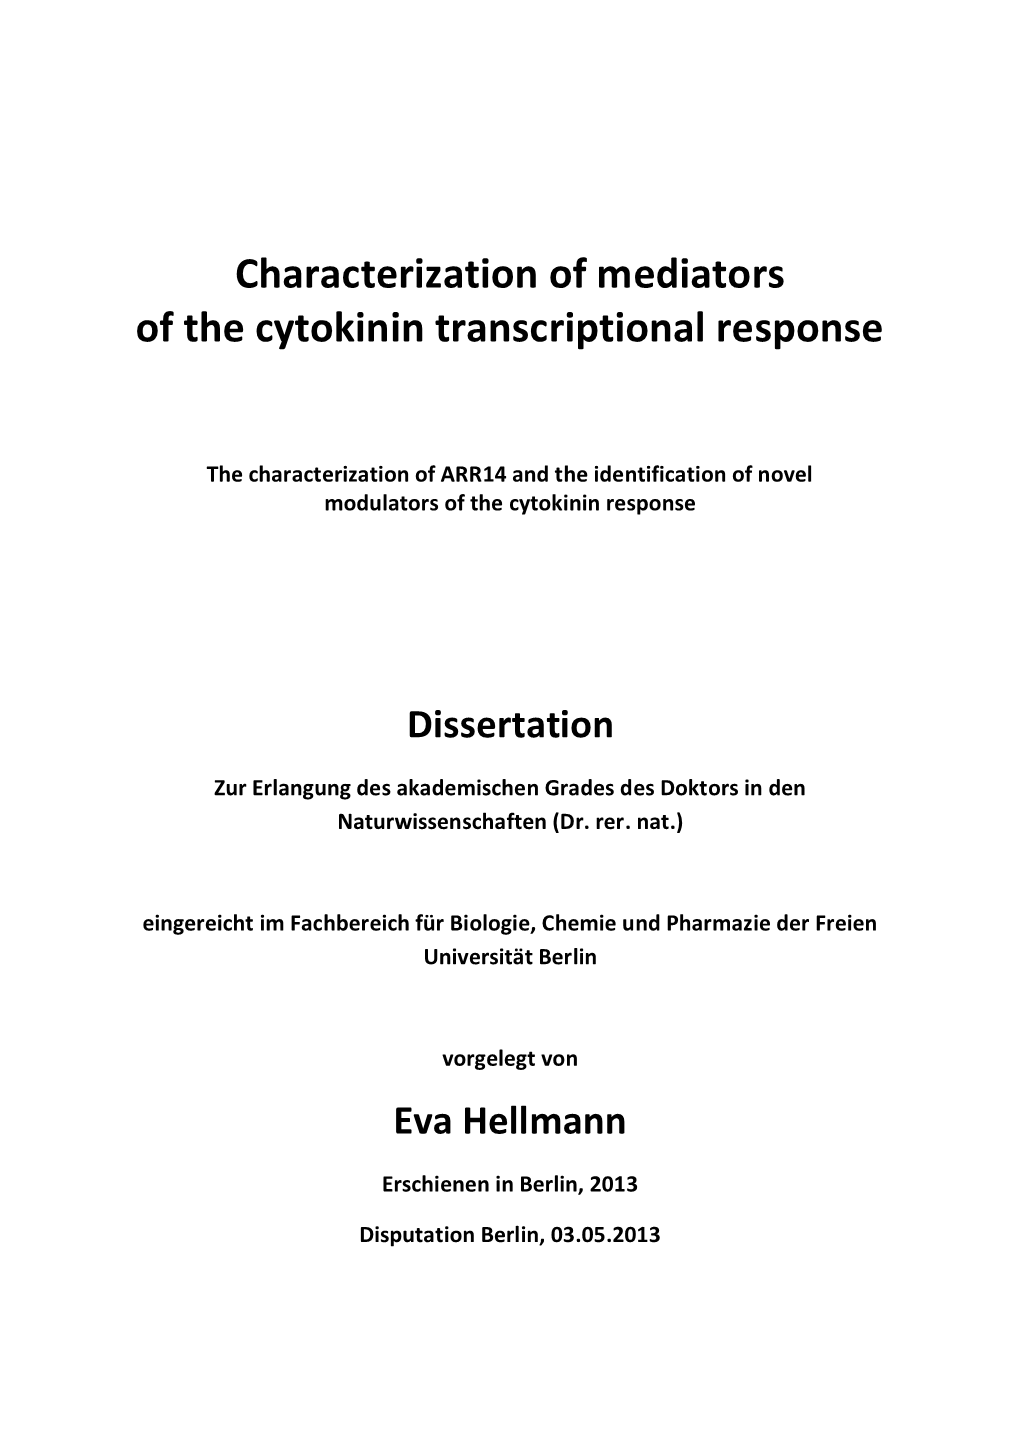 Characterization of Mediators of the Cytokinin Transcriptional Response